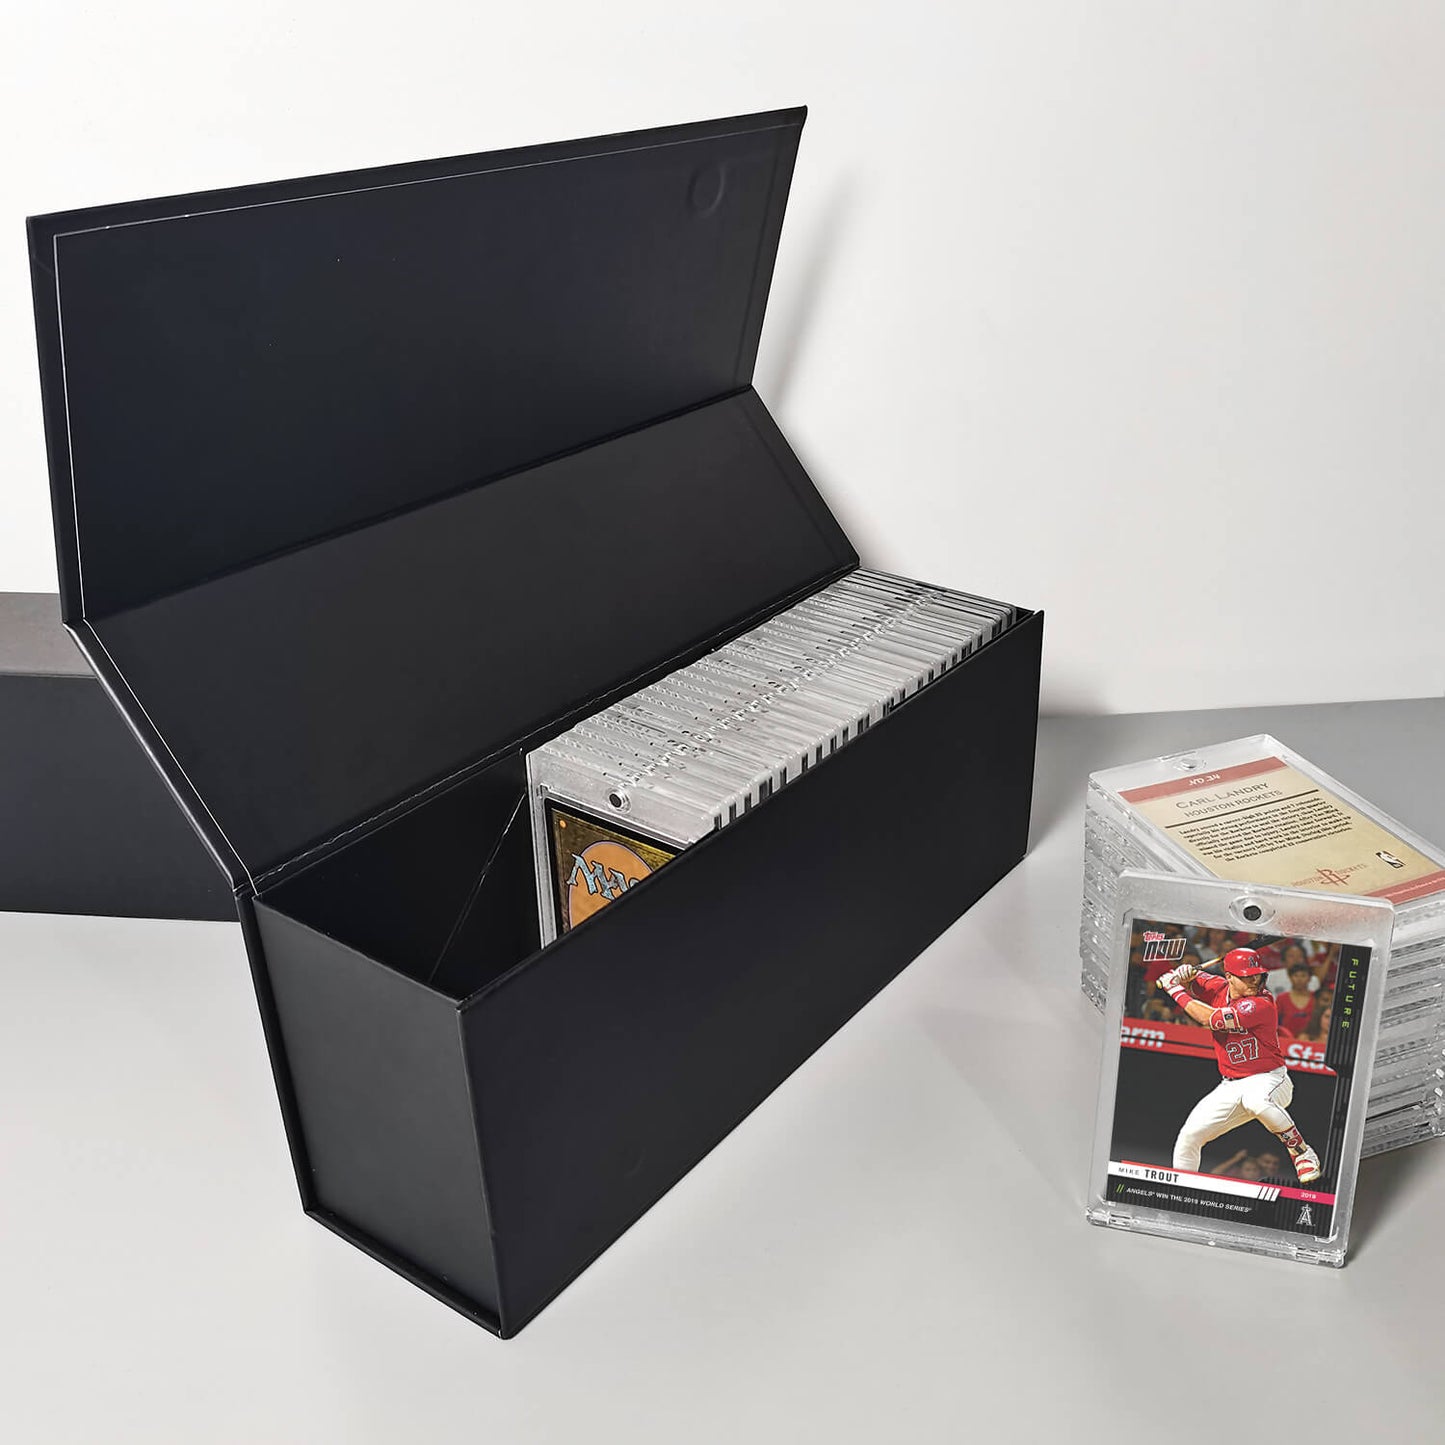 Magnetic Card Holder Storage Box